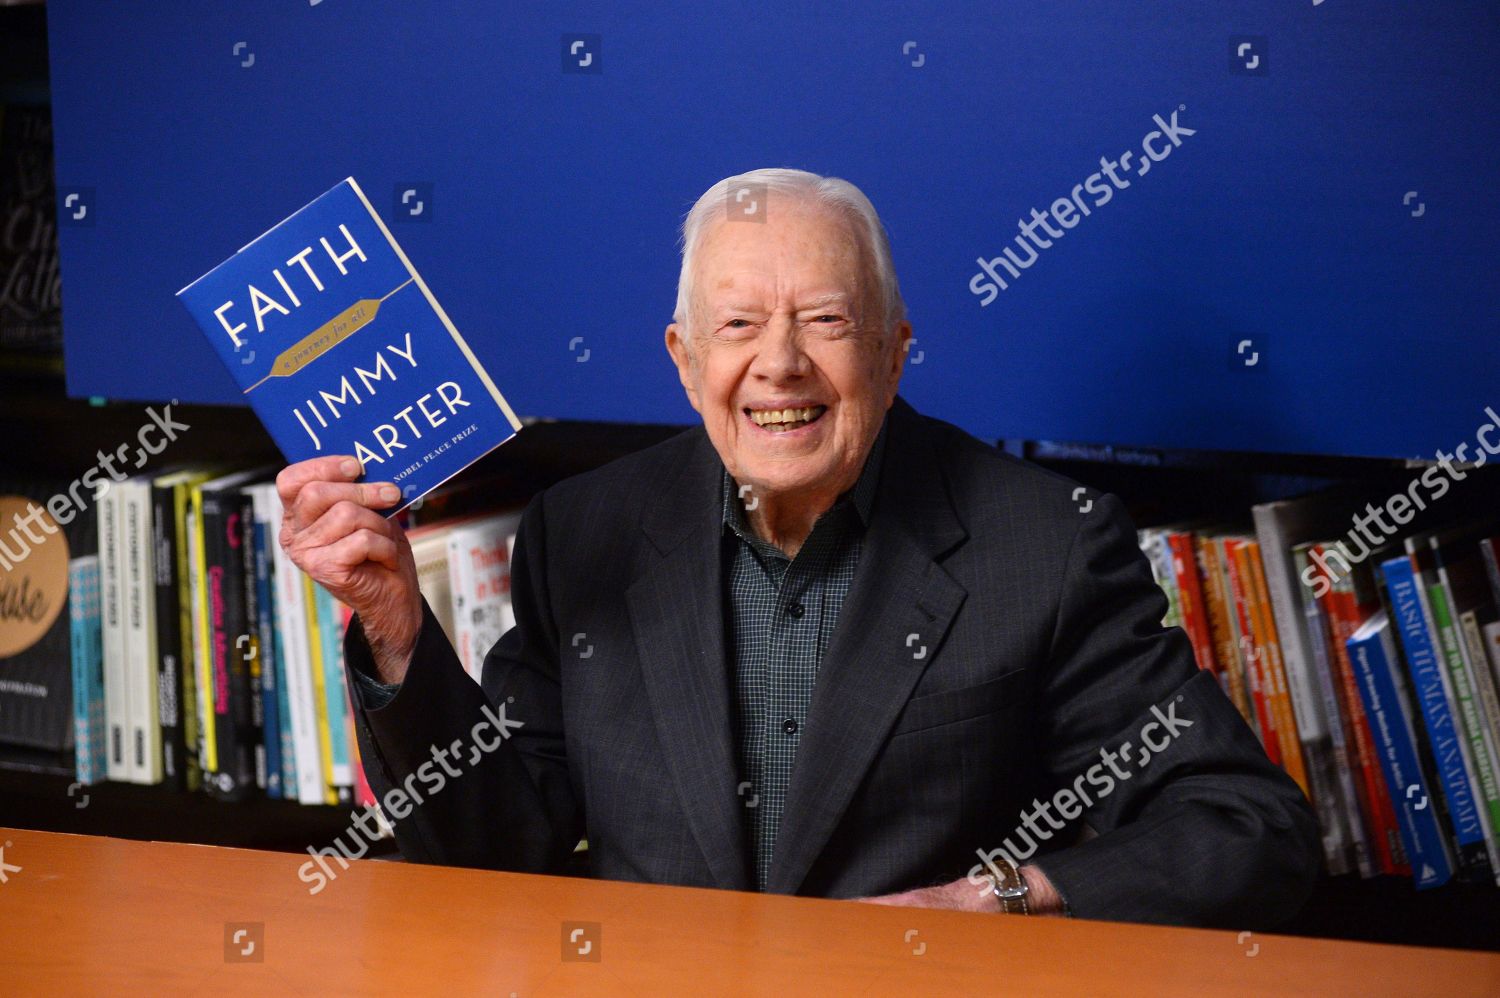 Faith A Journey For All By Jimmy Carter